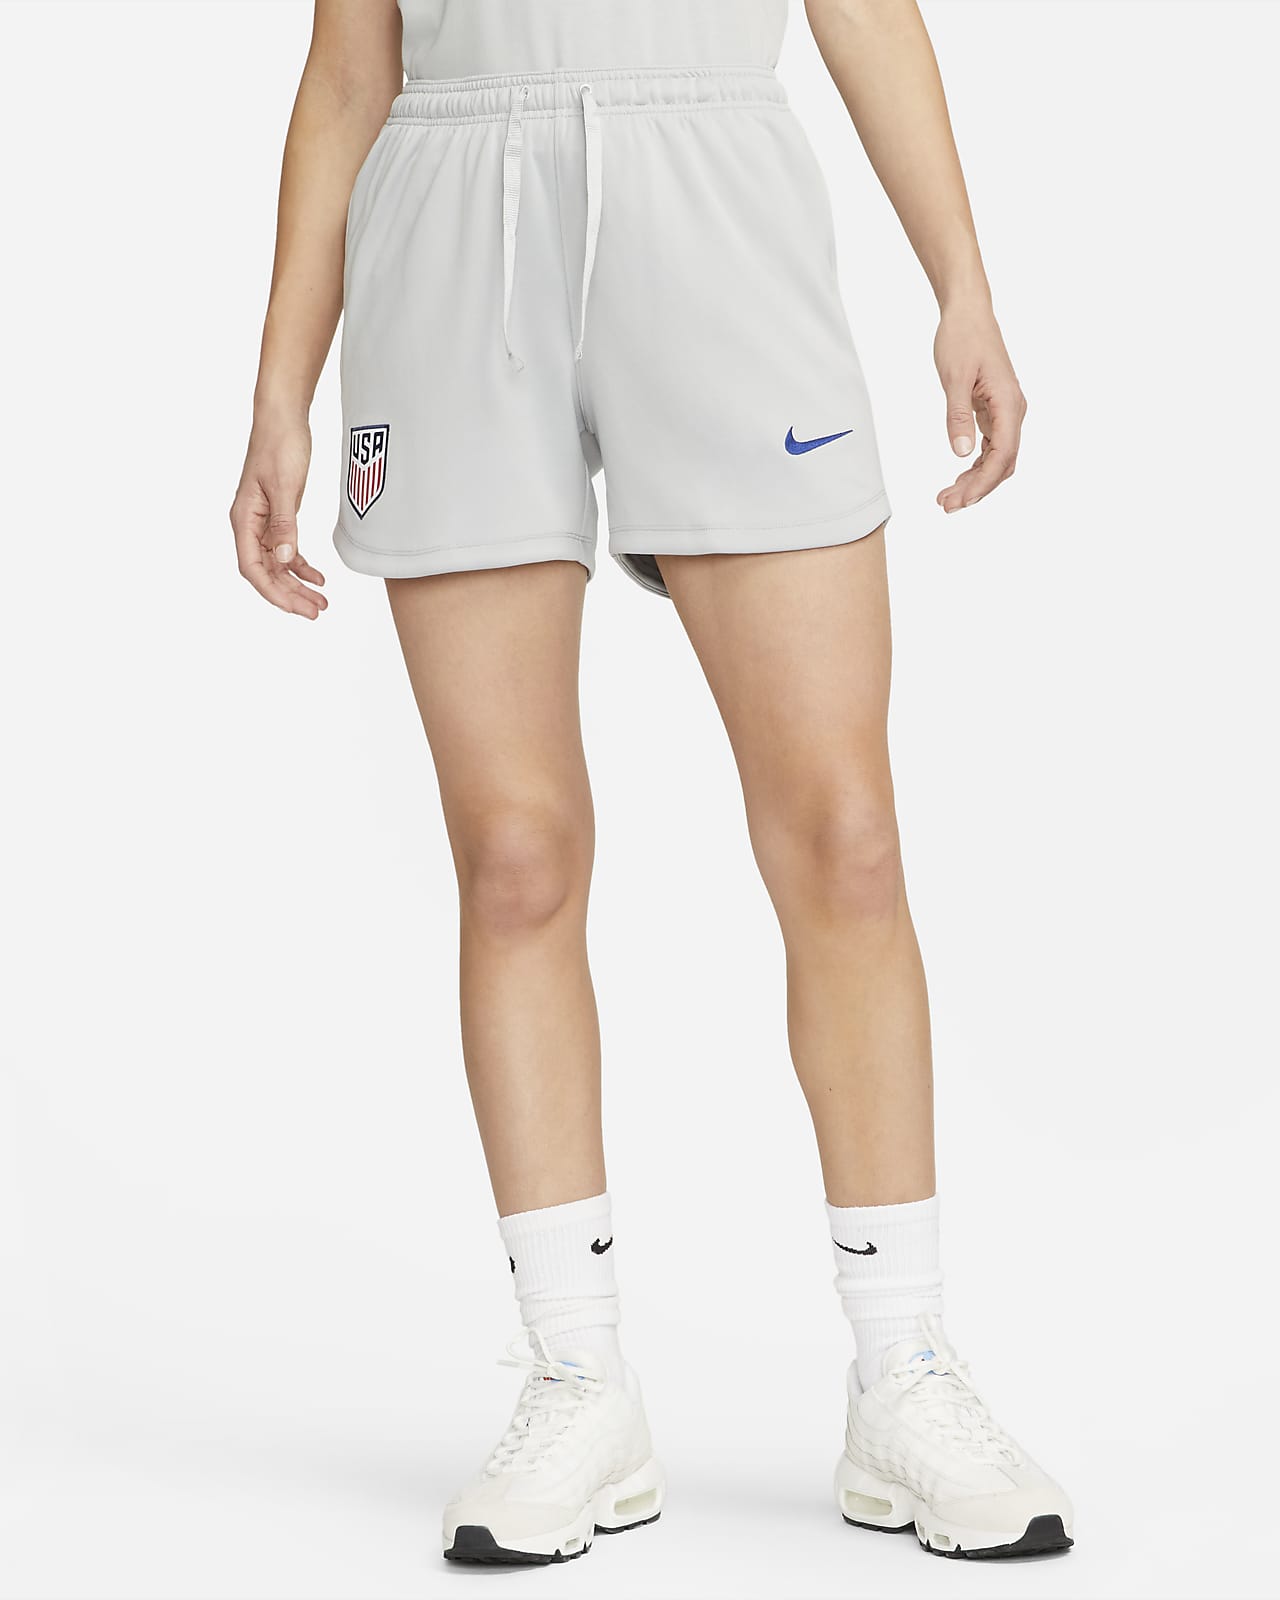 U.S. Women's Nike Dri-FIT Soccer Shorts